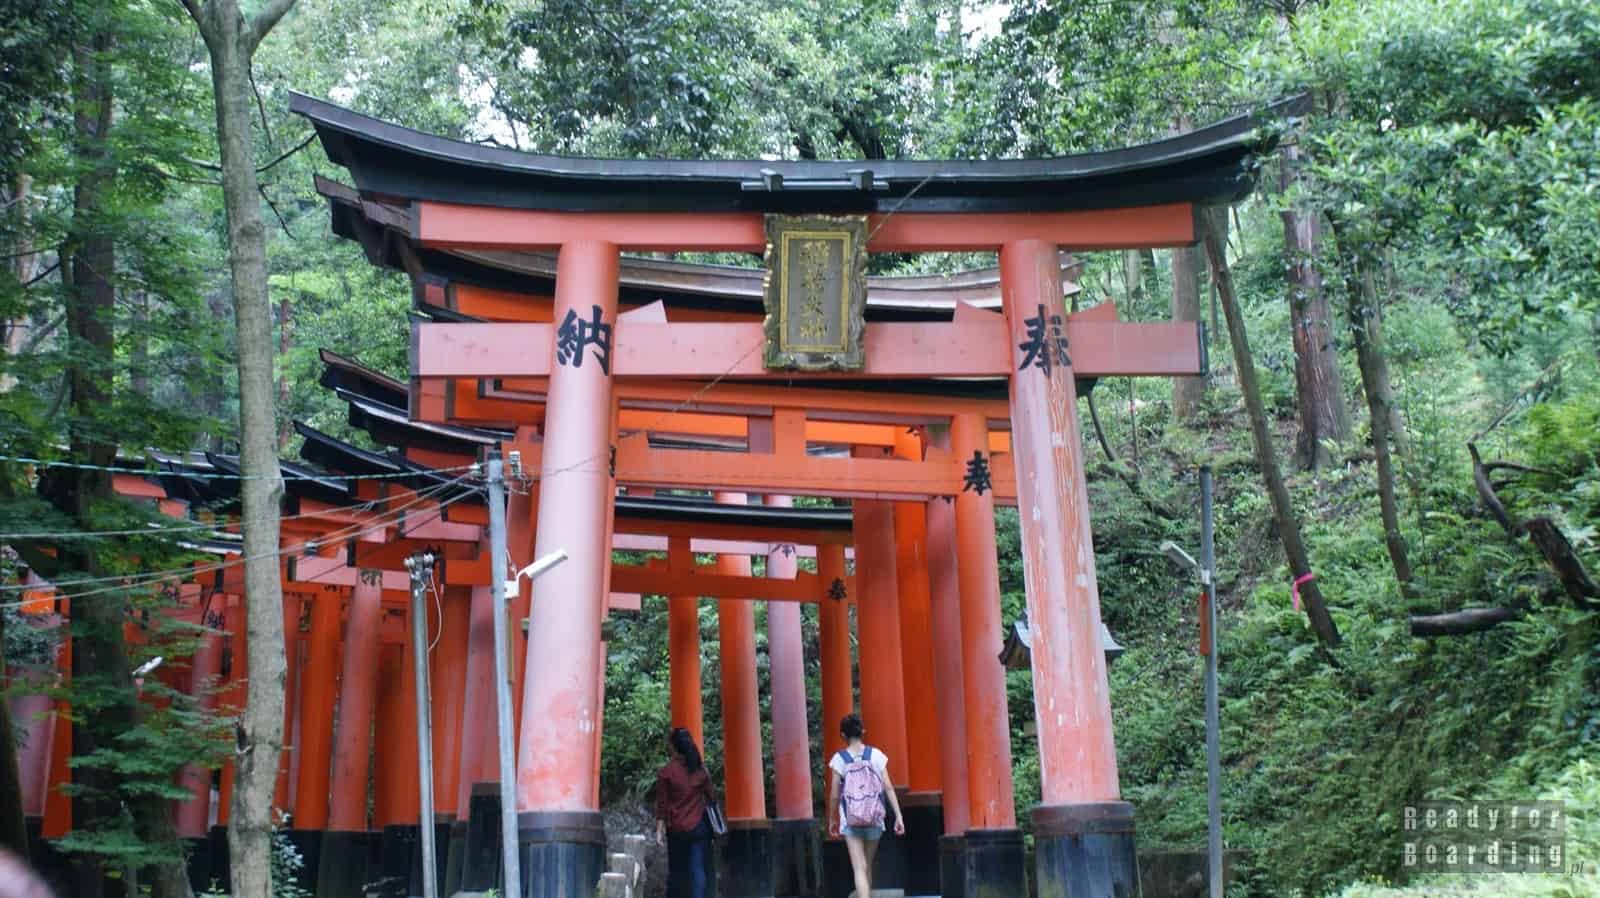 Senbon Torii - a path with Torii gates in Kyoto